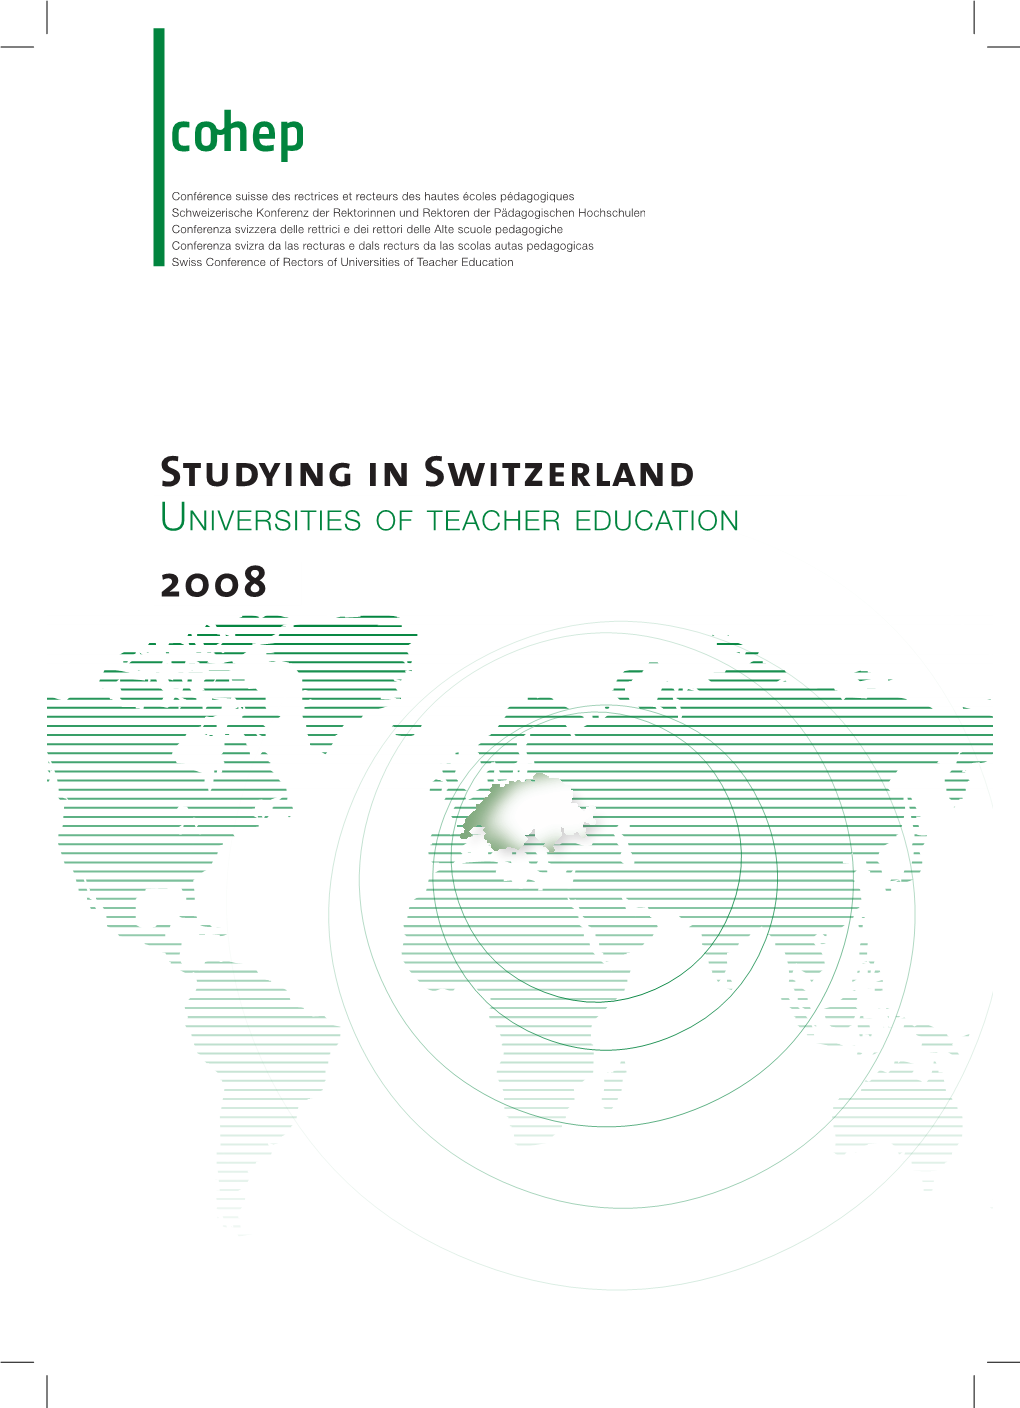 Studying in Switzerland 2008